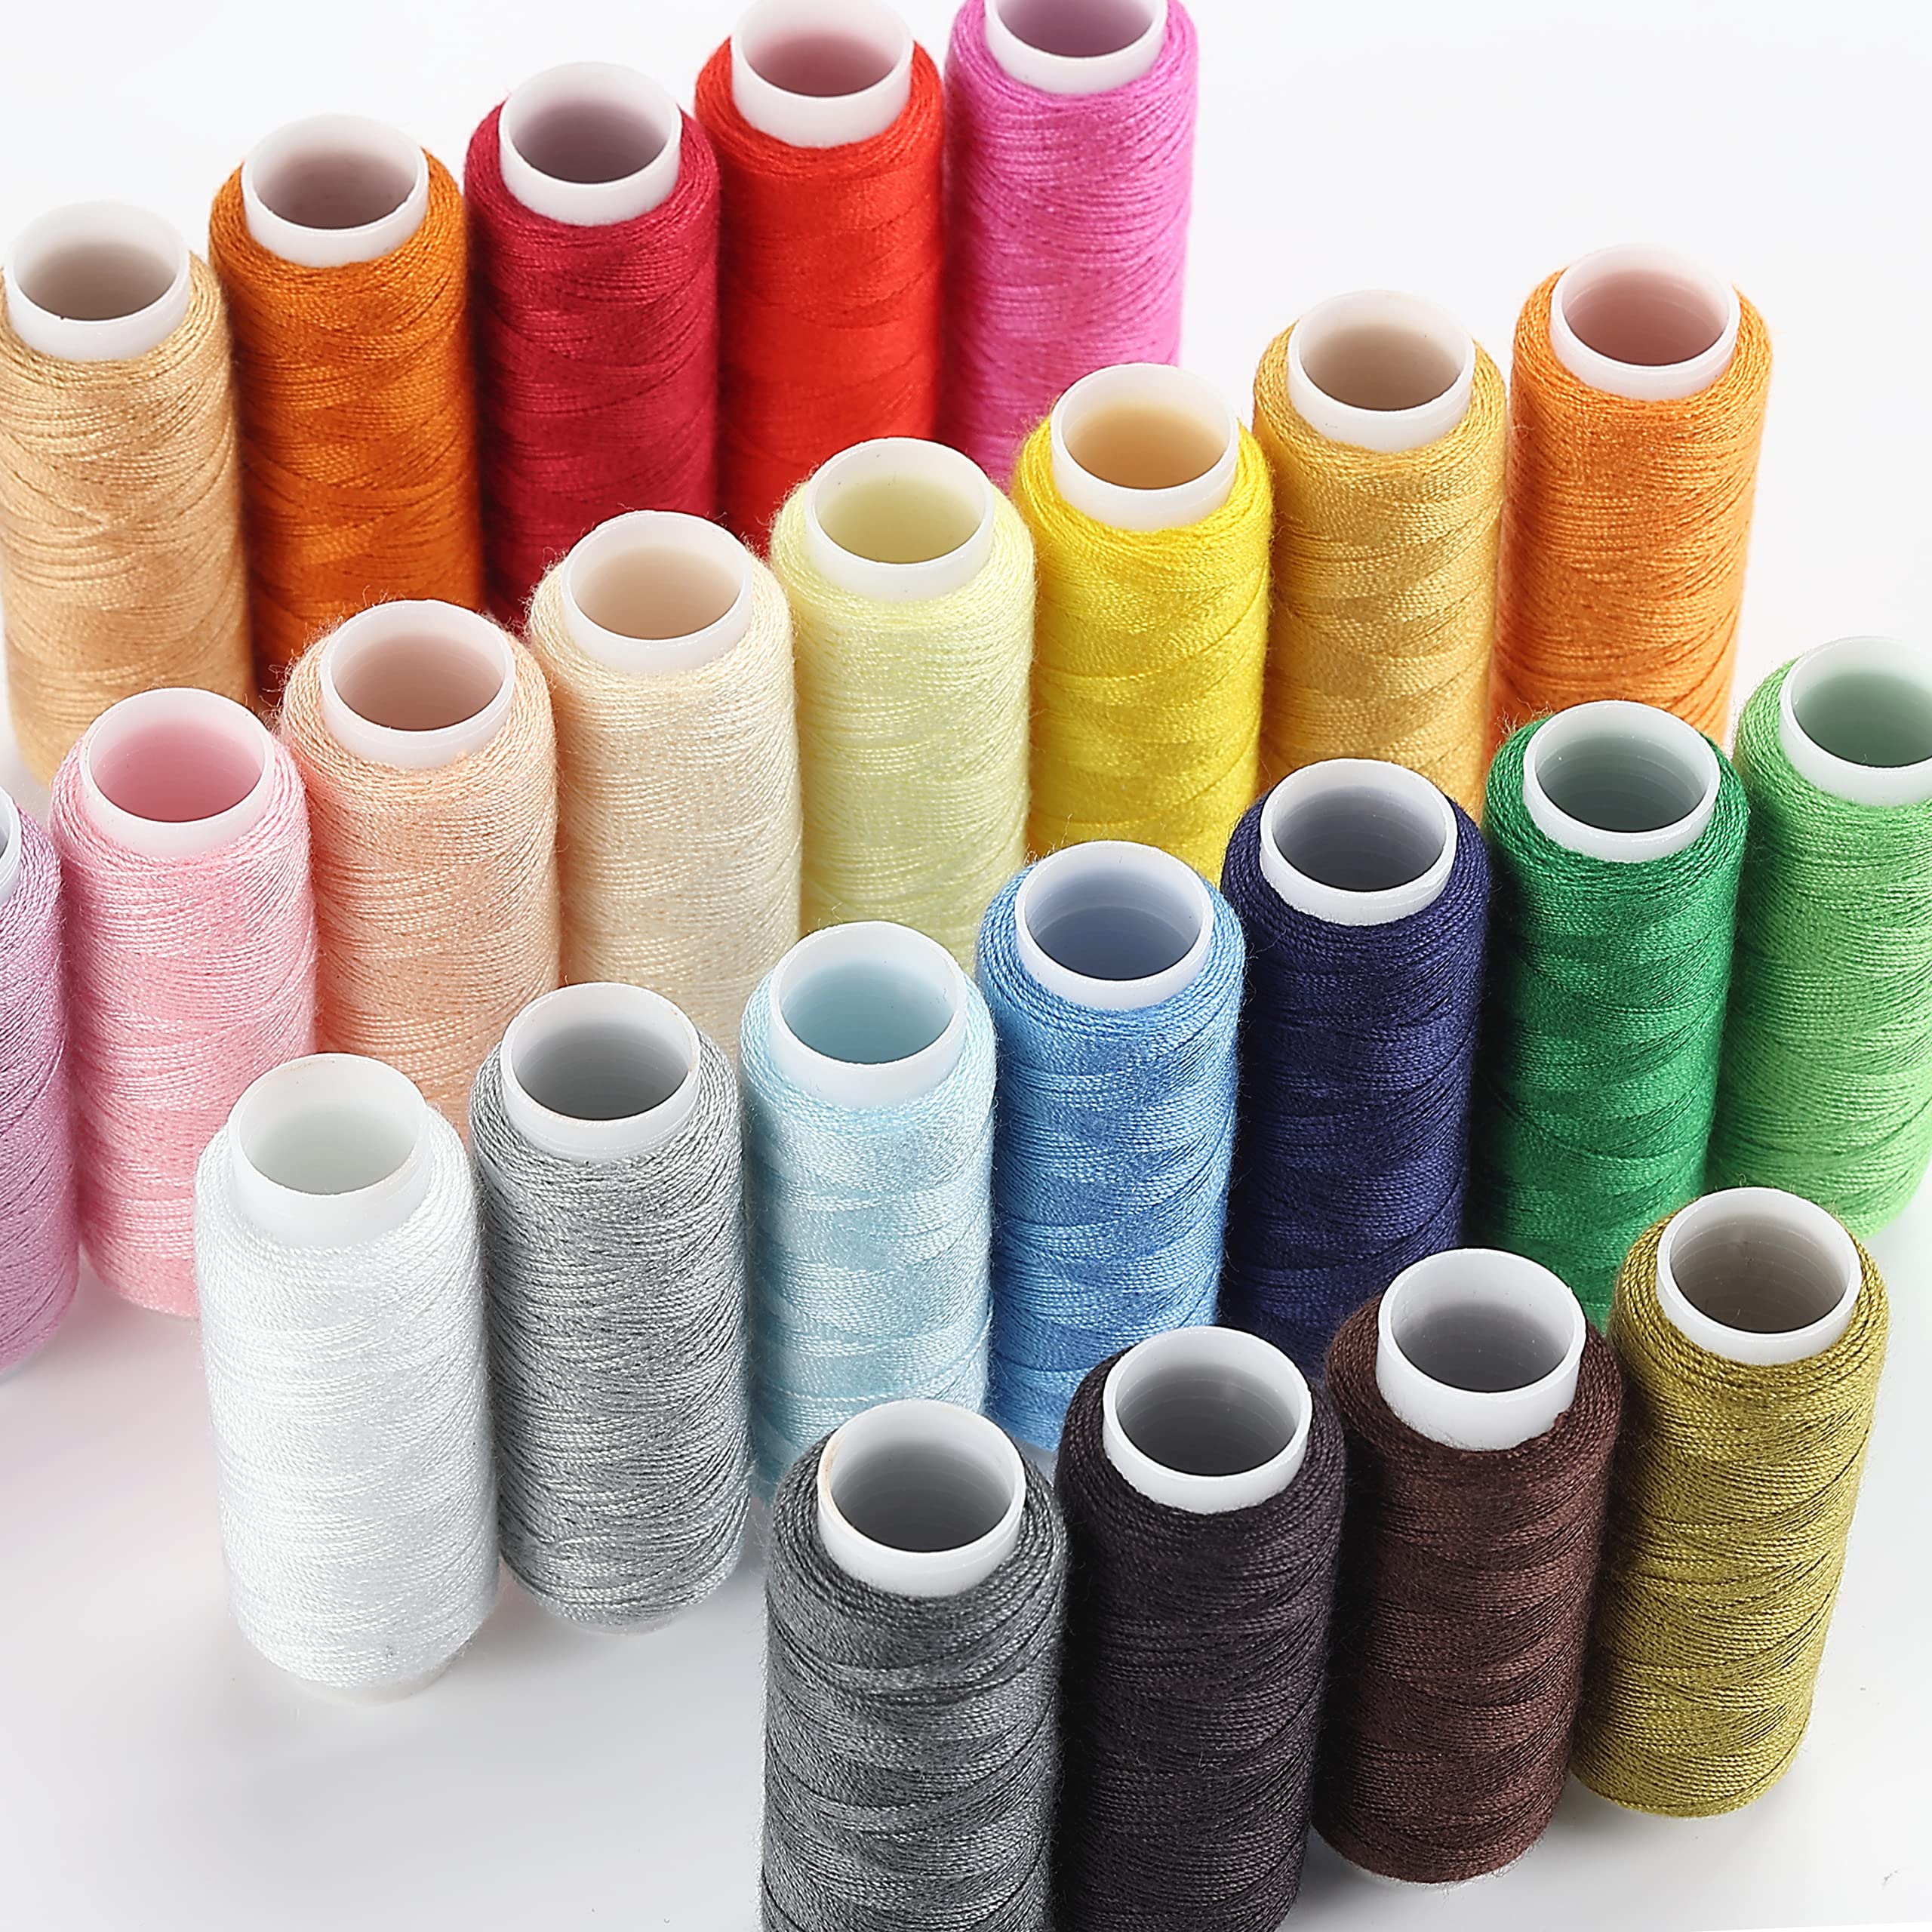 Mr. Pen- Sewing Threads Kit 24 pcs 92 Yards per Spool 24 Colors